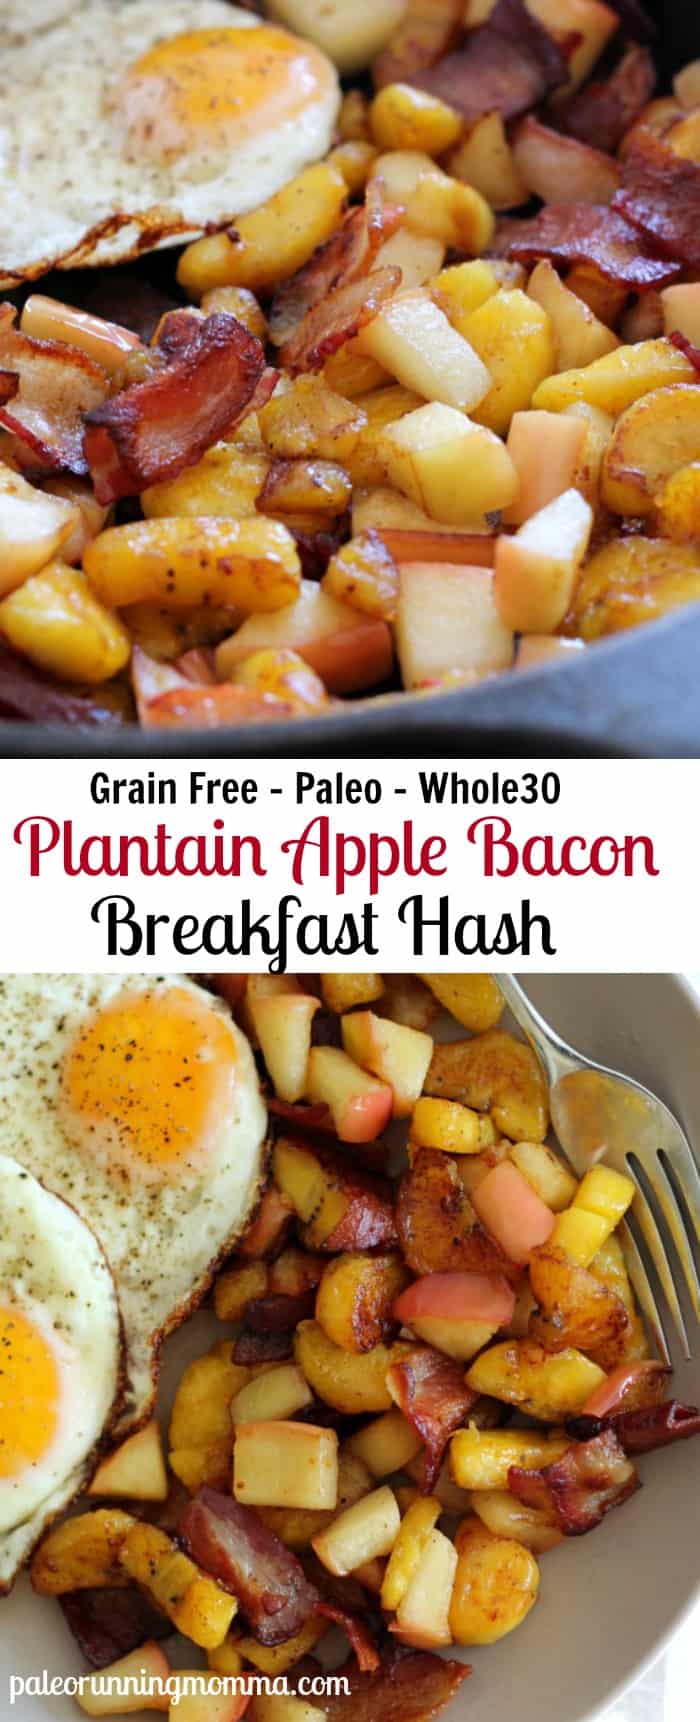 Sweet Plantain Apple Bacon Breakfast hash - With fried Eggs - #paleo #grainfree #glutenfree #whole30 #dairyfree